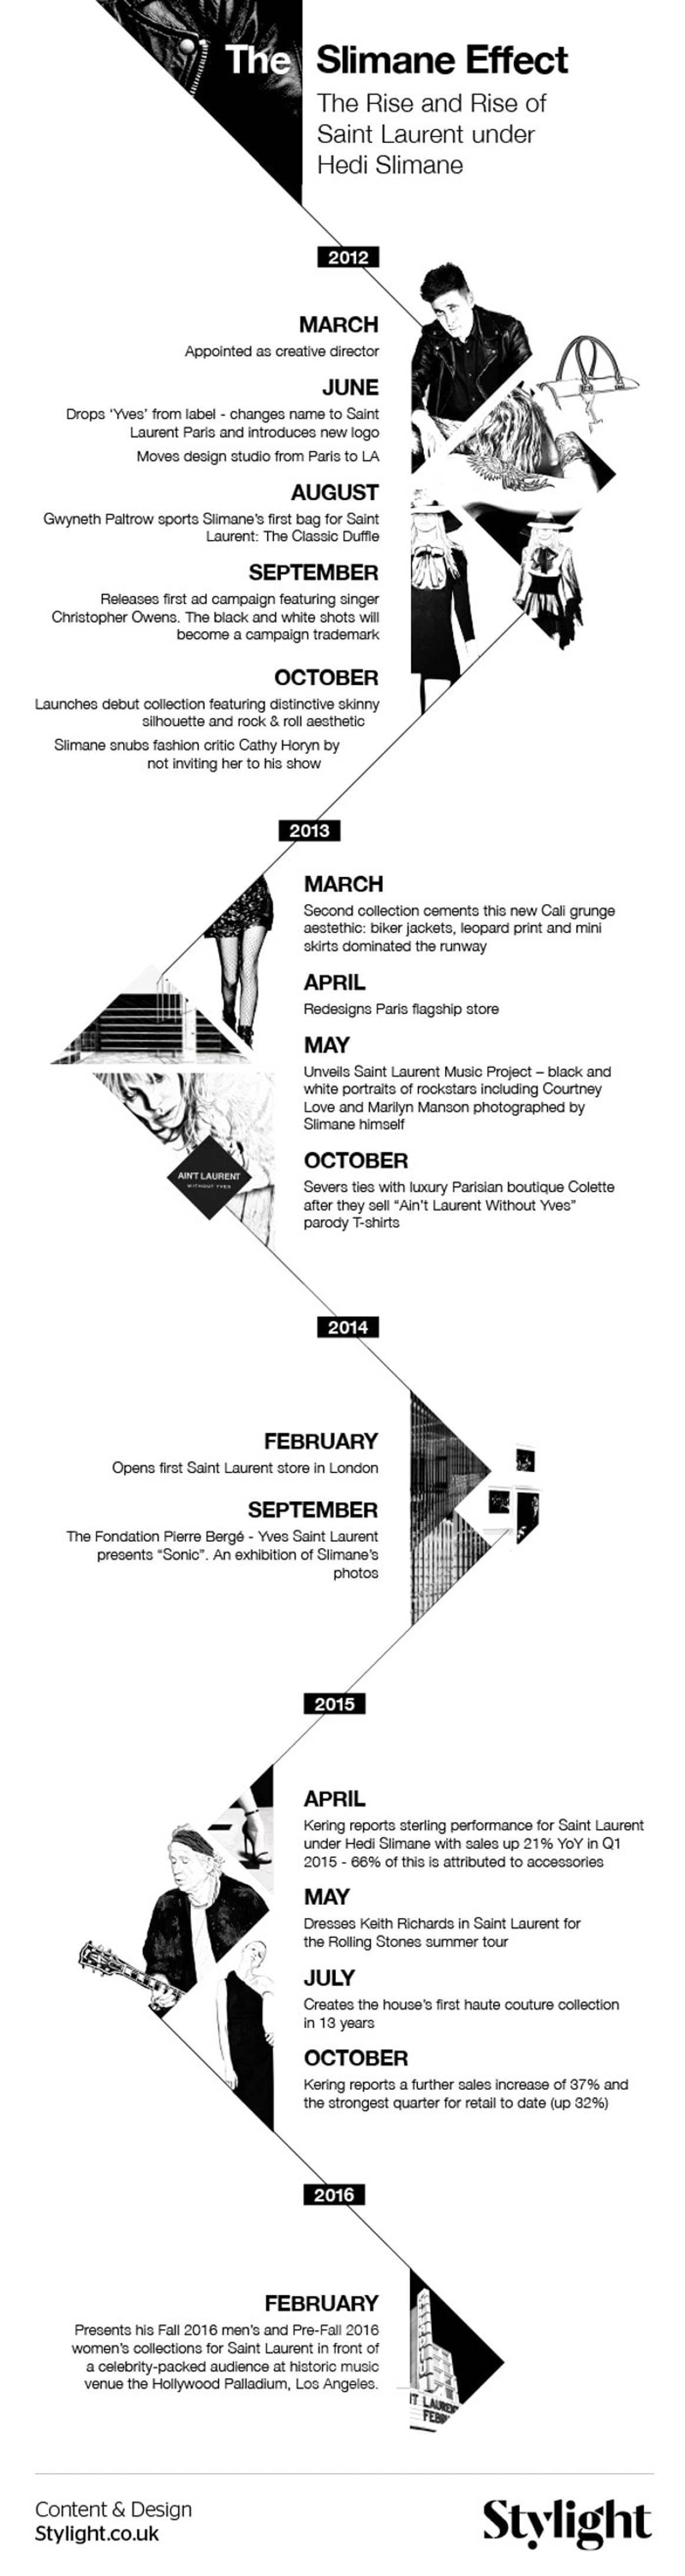 Infographic - Hedi Slimane exits YSL, The Slimane Effect